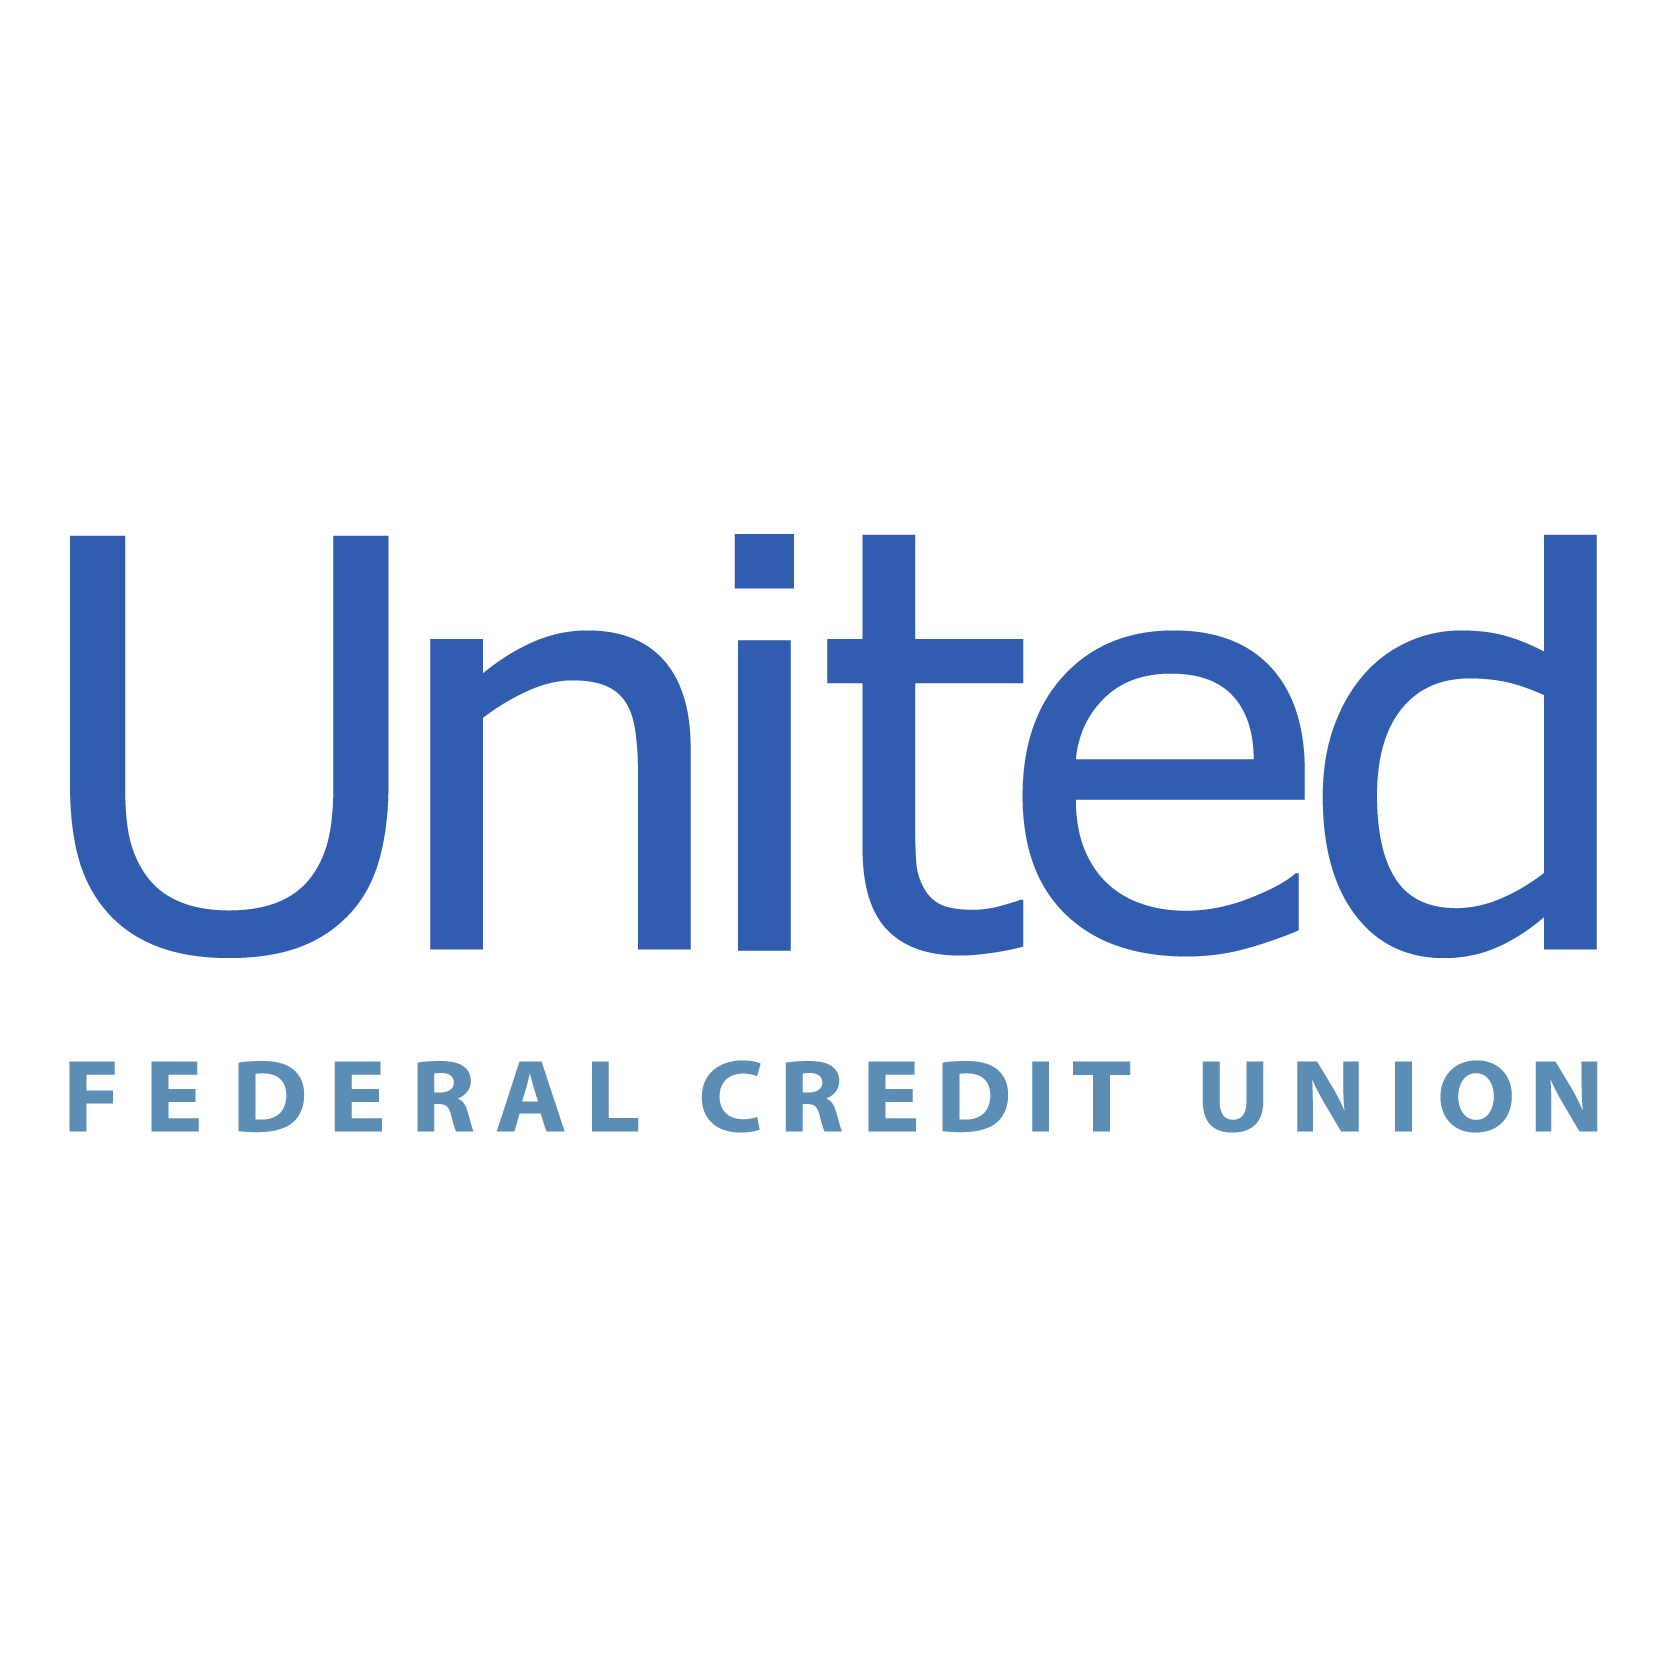 Susan McCormack - Mortgage Advisor - United Federal Credit Union Logo